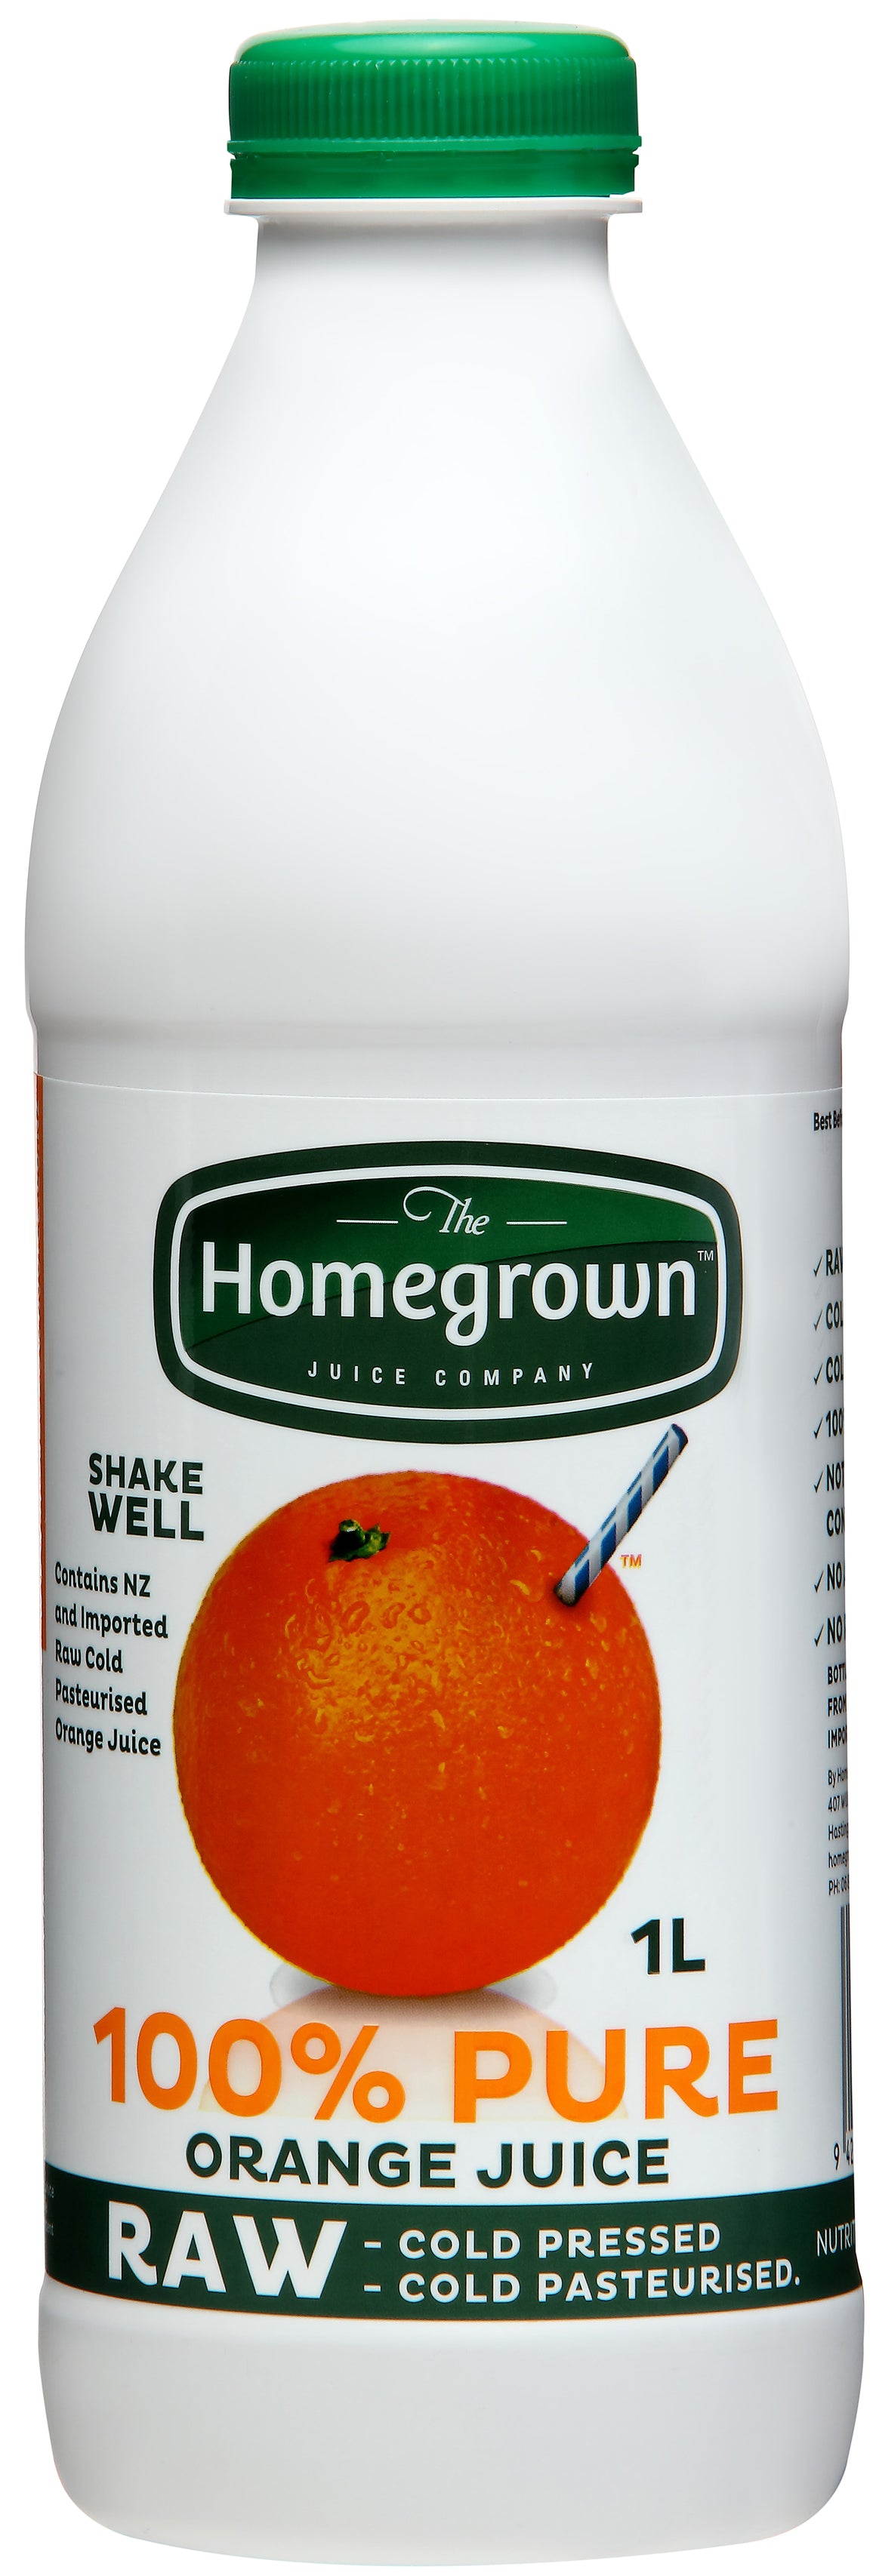 1L Homegrown RAW cold pressed 100% Pure Orange Juice